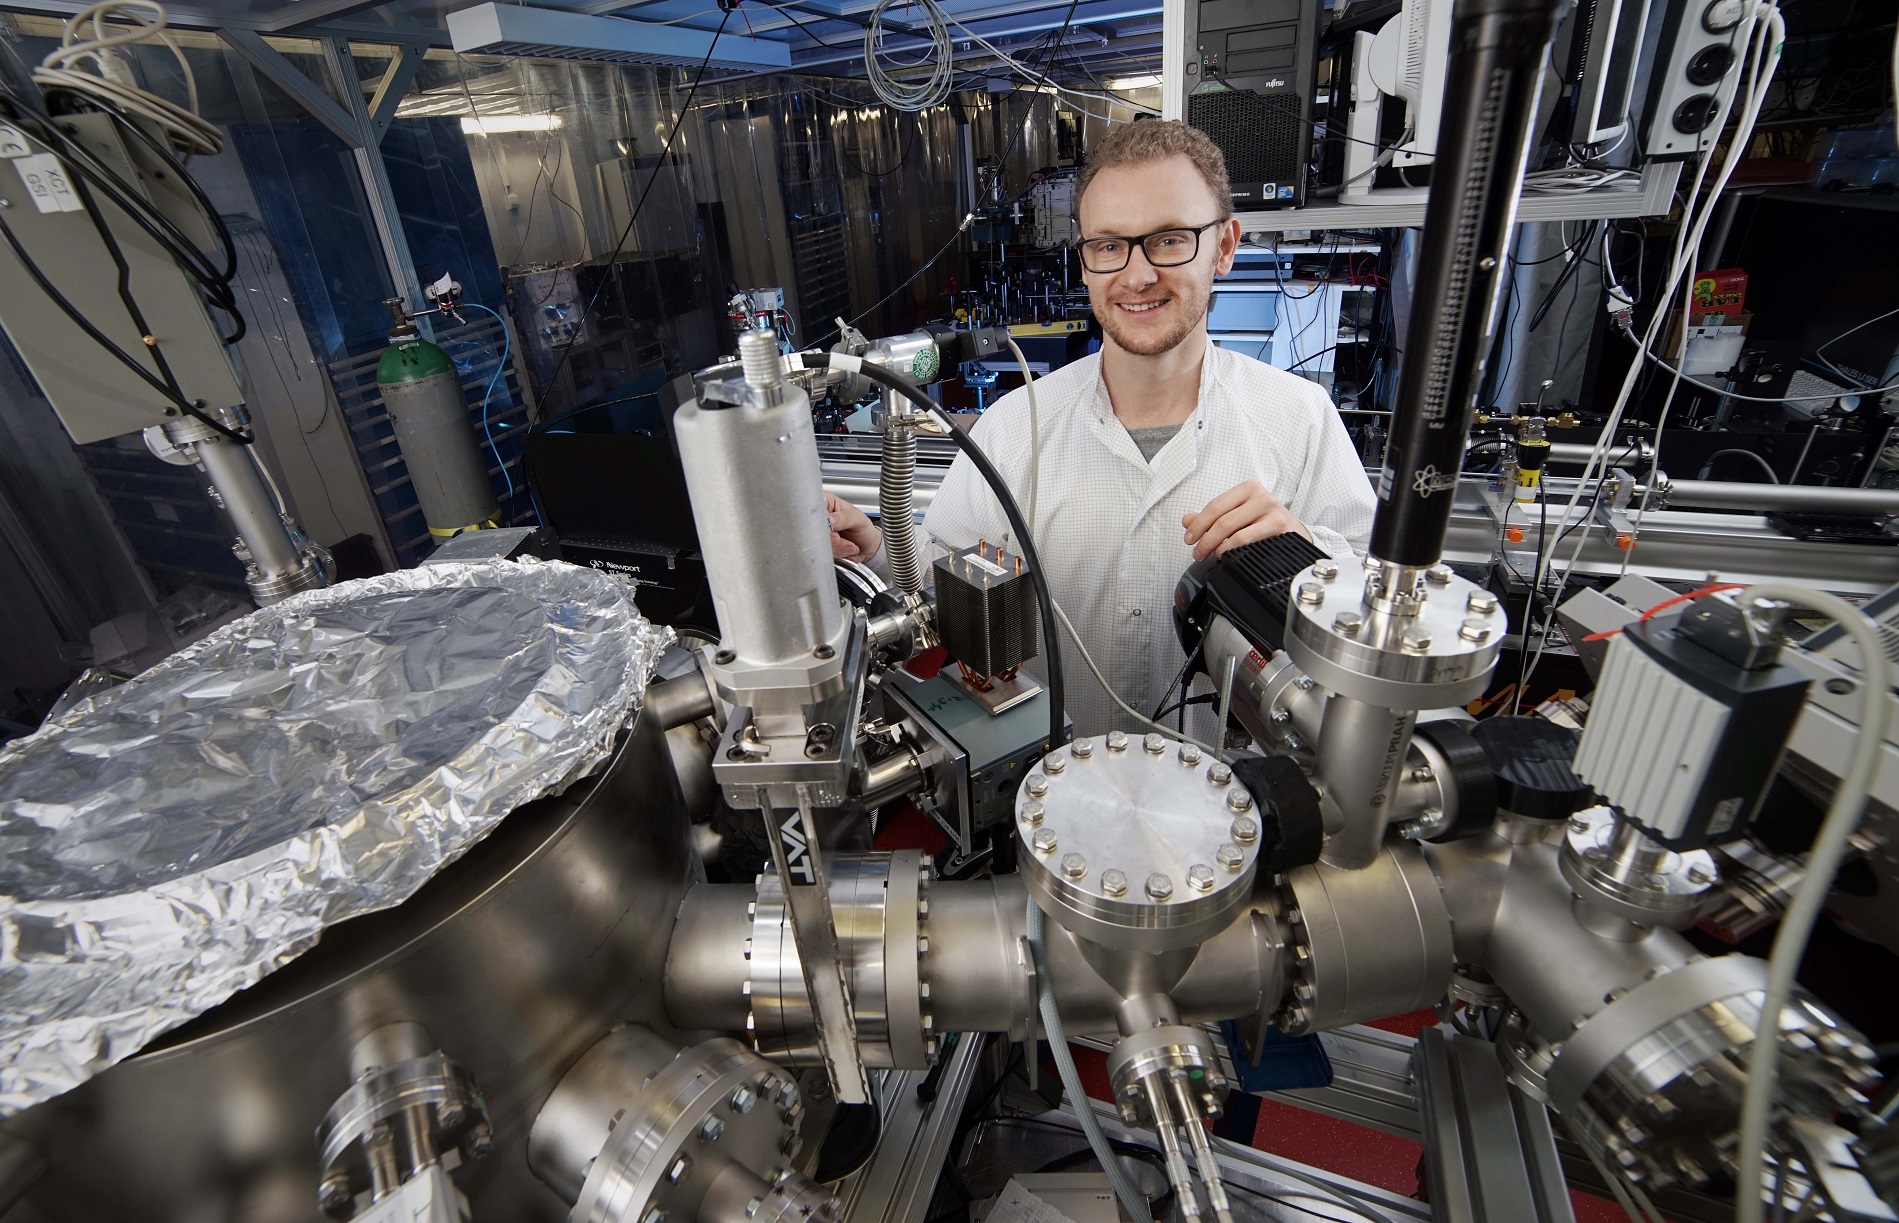 Silvio Fuchs in a laboratory of the Institute of Optics and Quantum Electronics of the Friedrich Schiller University